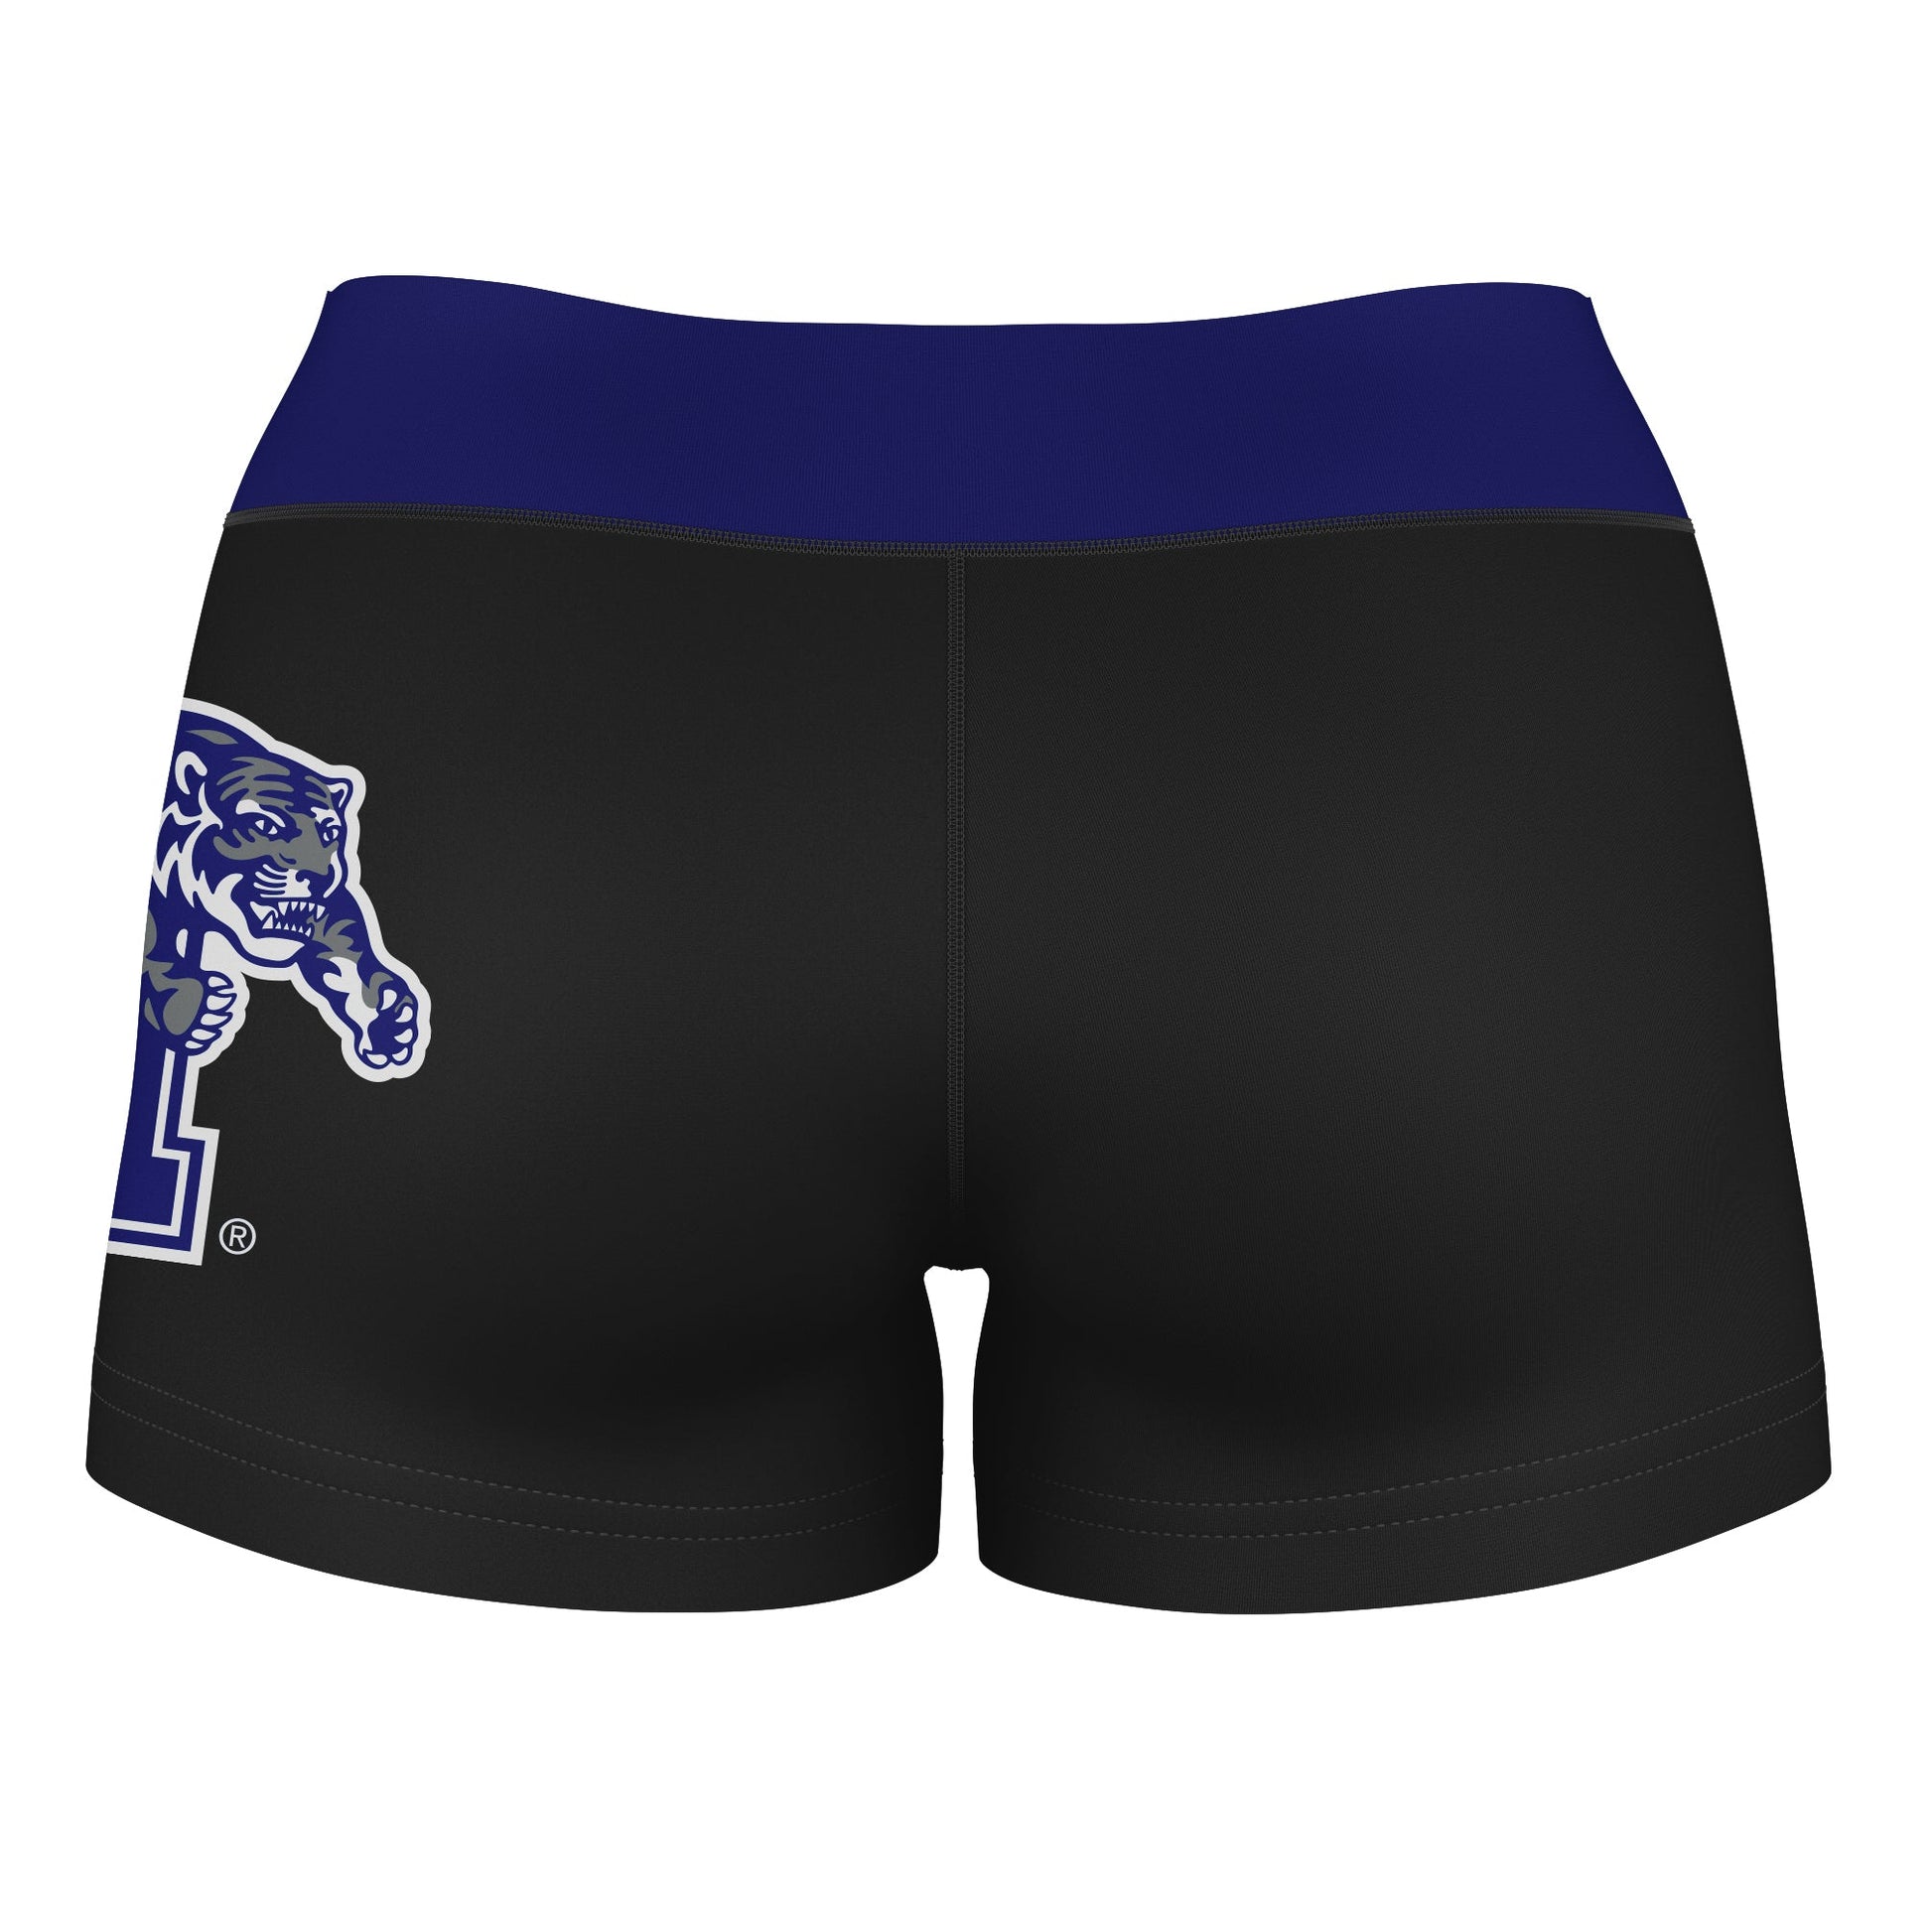 Memphis Tigers Vive La Fete Game Day Logo on Thigh and Waistband Black & Blue Women Yoga Booty Workout Shorts 3.75 Inseam" - Vive La F̻te - Online Apparel Store